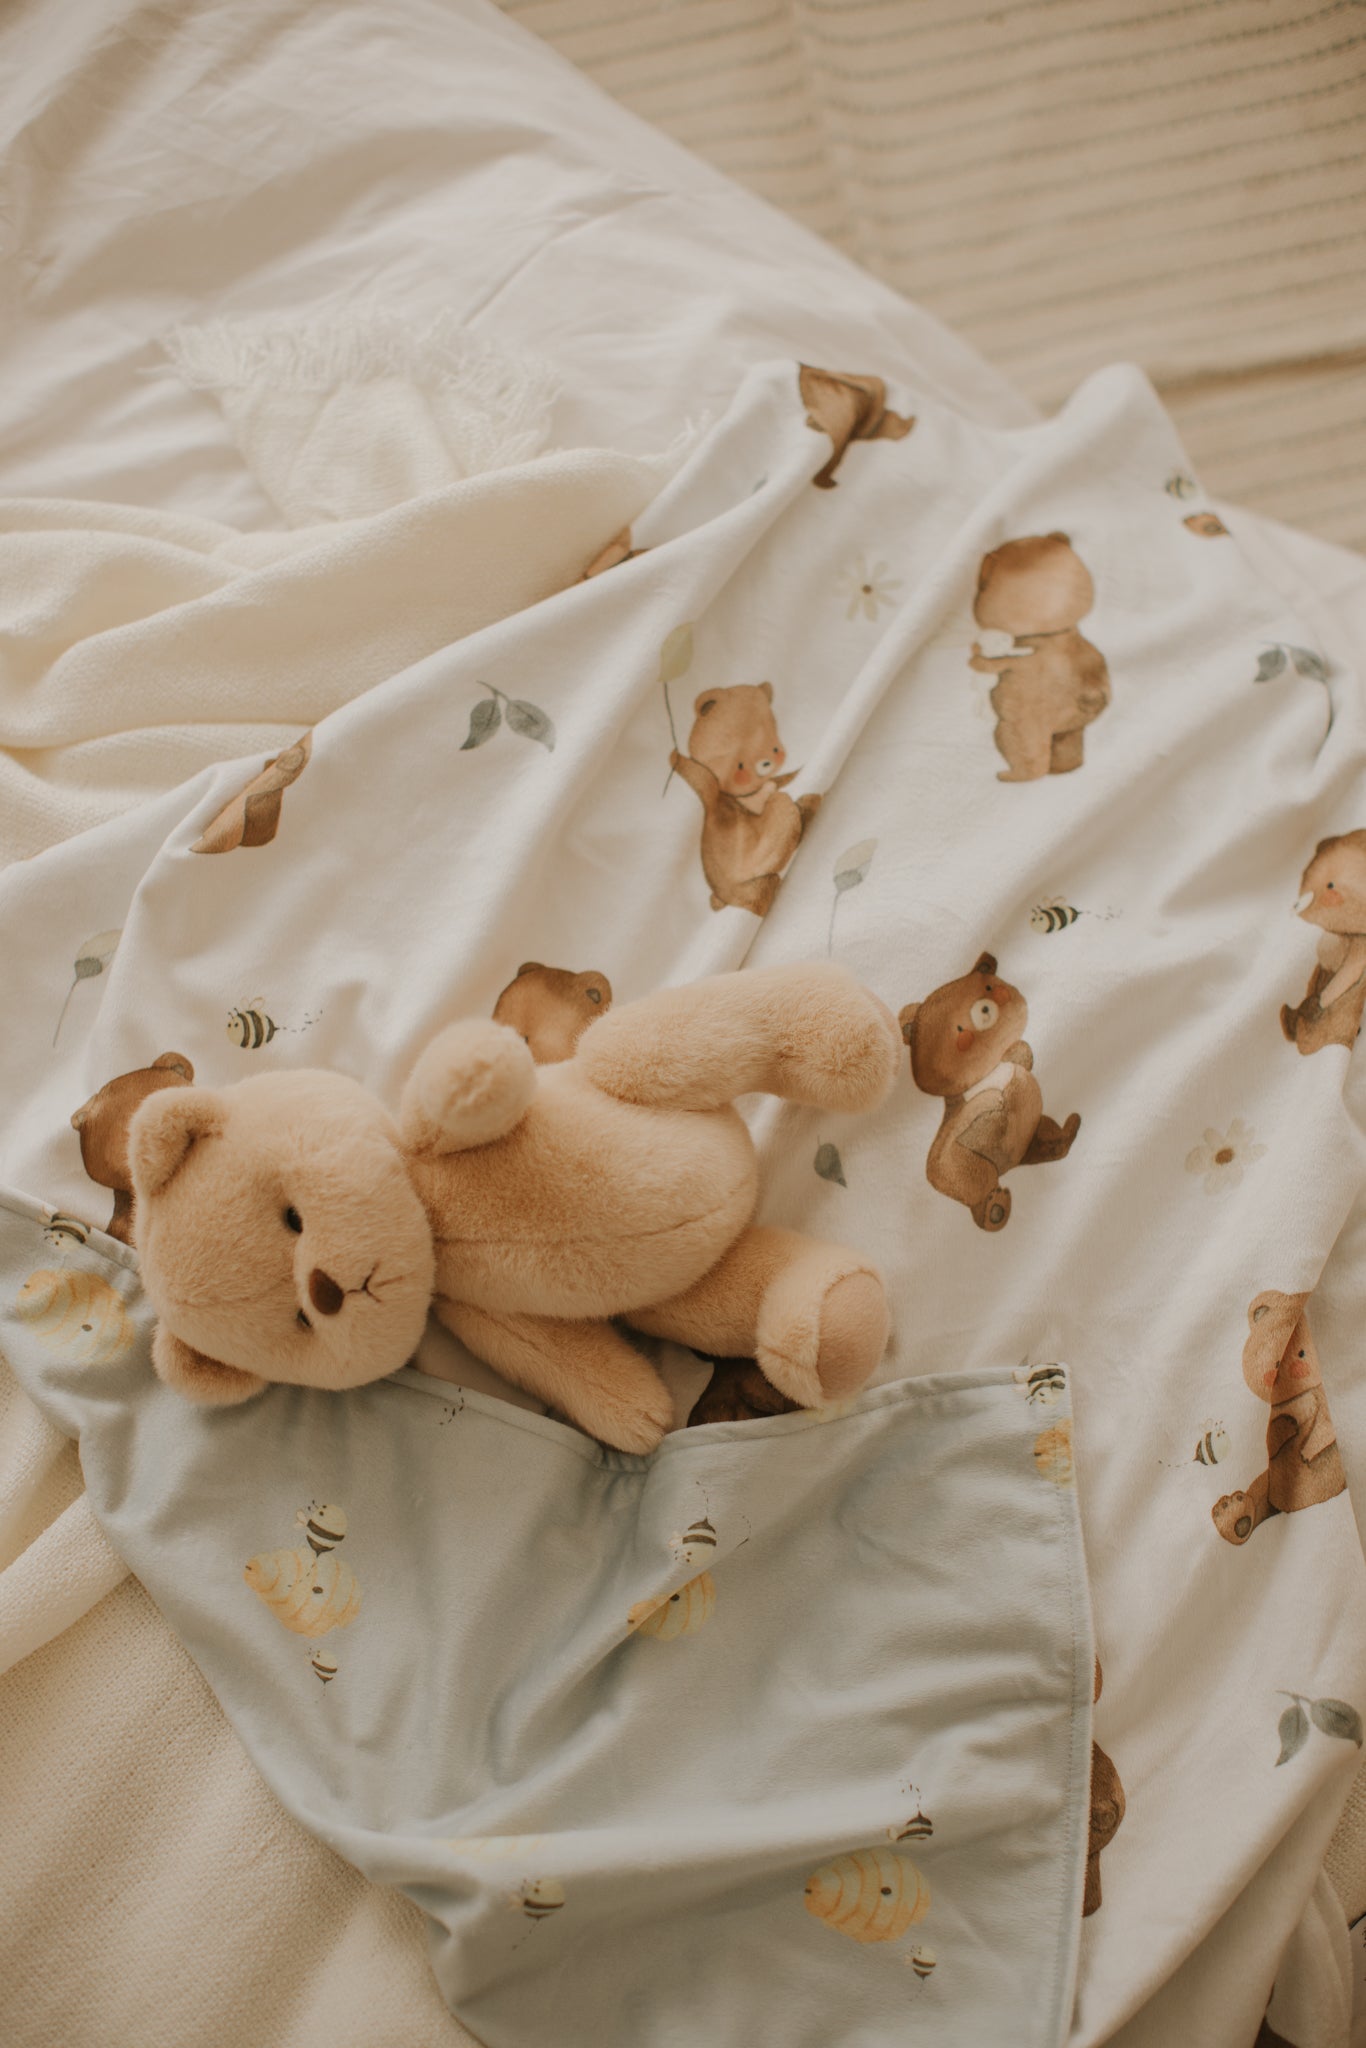 My little blanket - Little bear - Veille sur toi